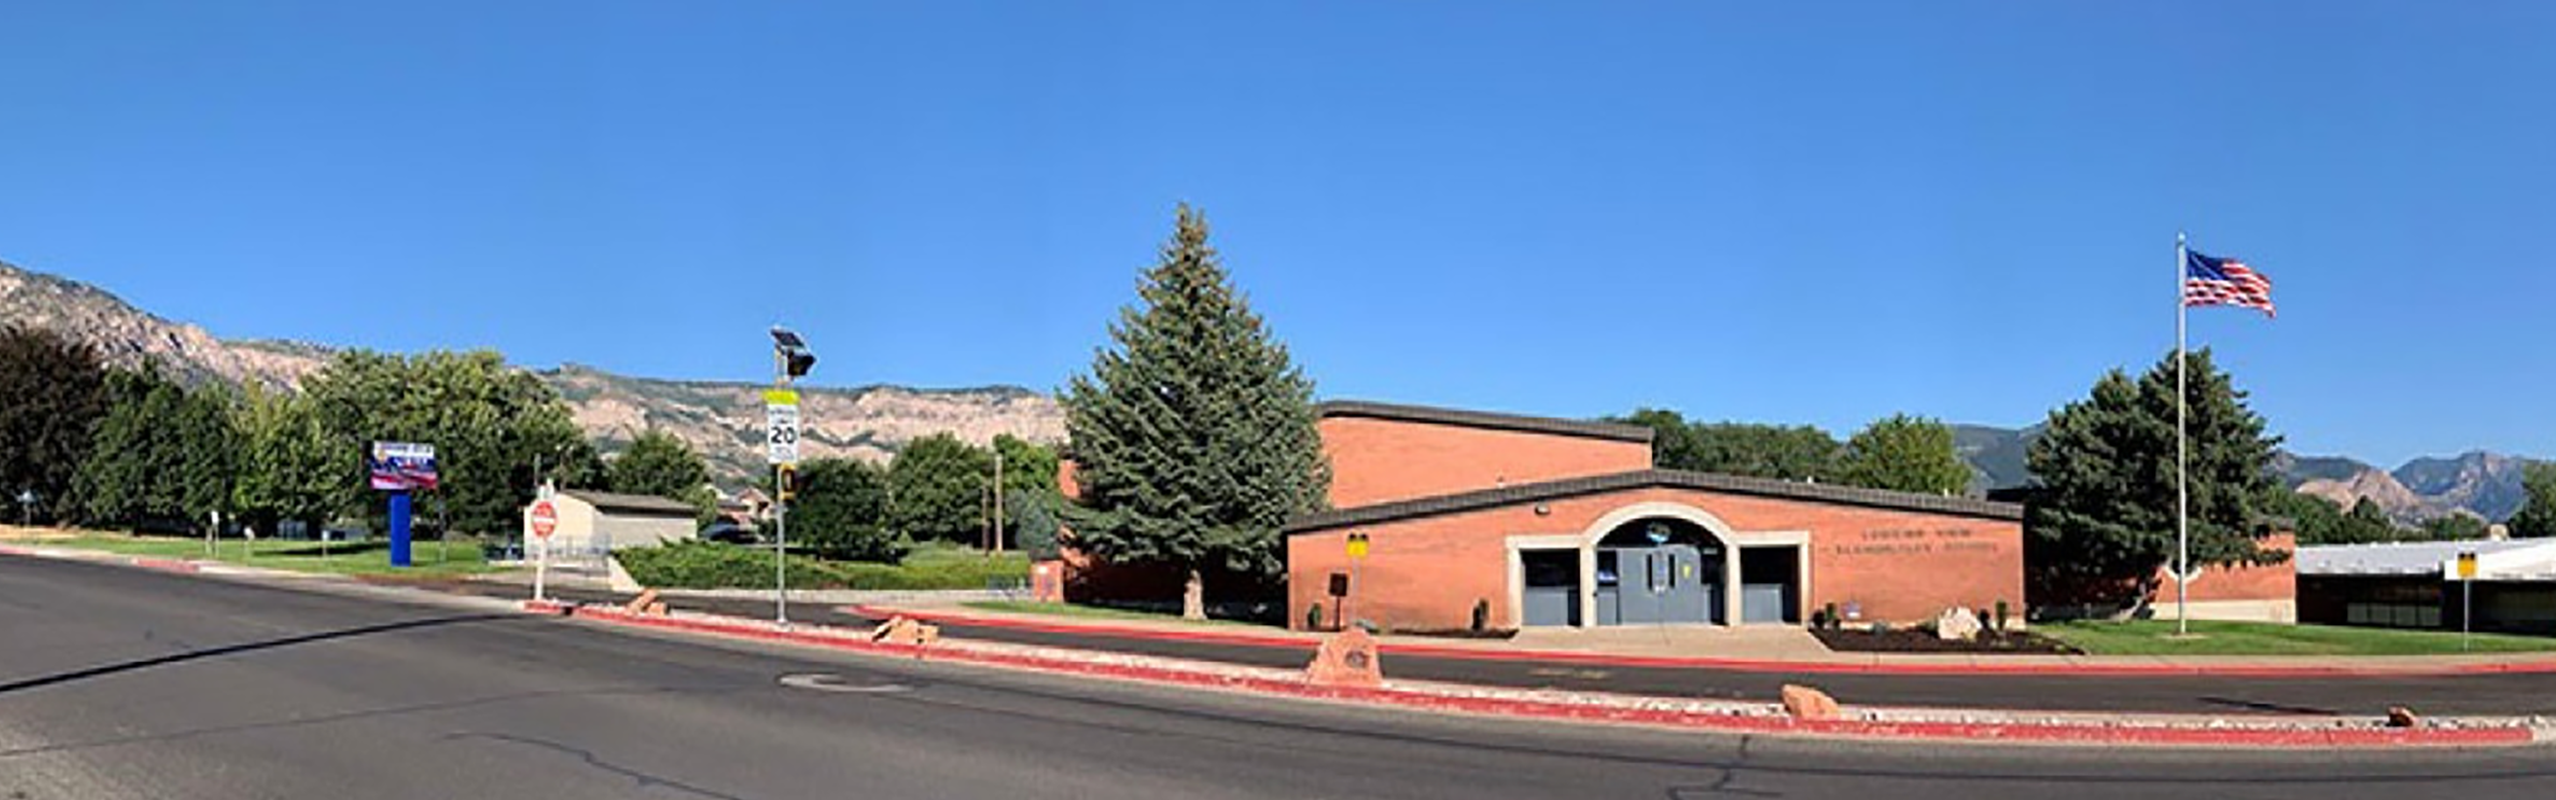 Lomond View Elementary School